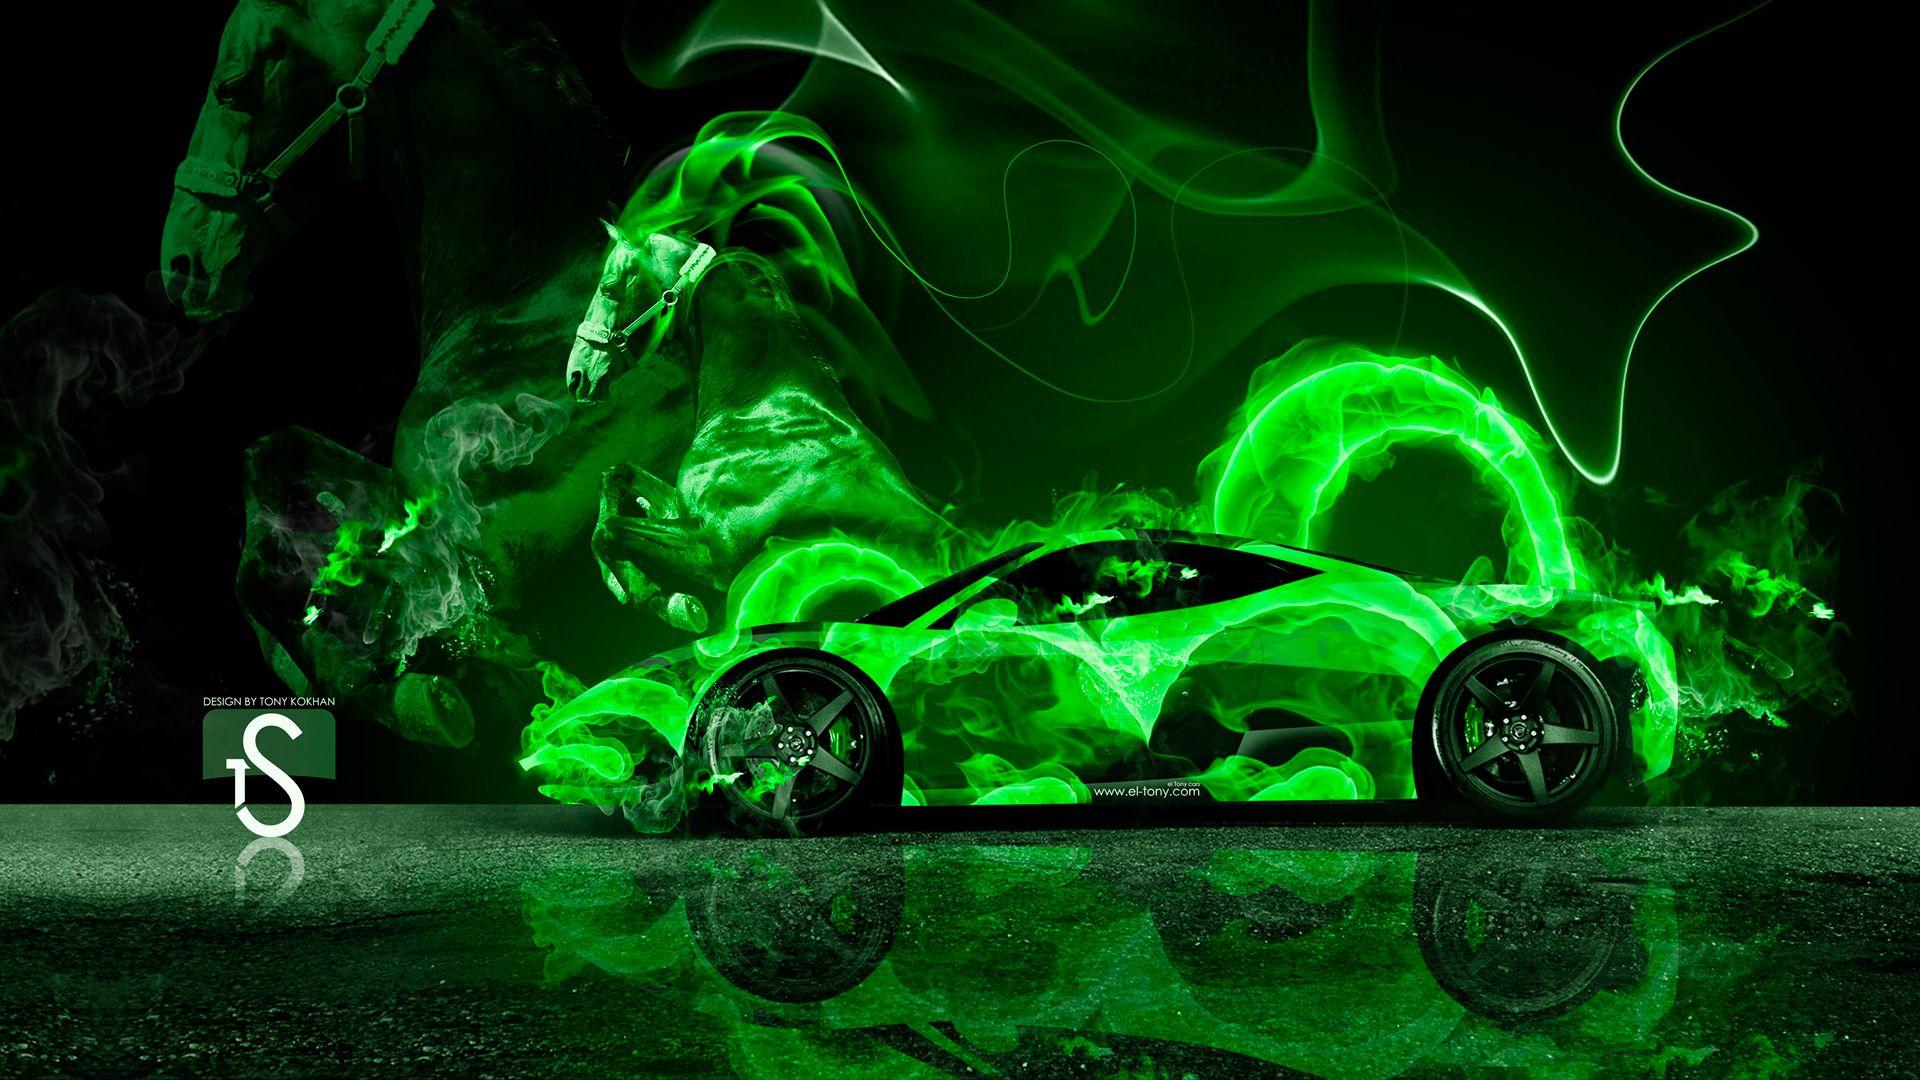 Ferrari Green Fire Horse Car 2014 HD Wallpaper Design By Tony